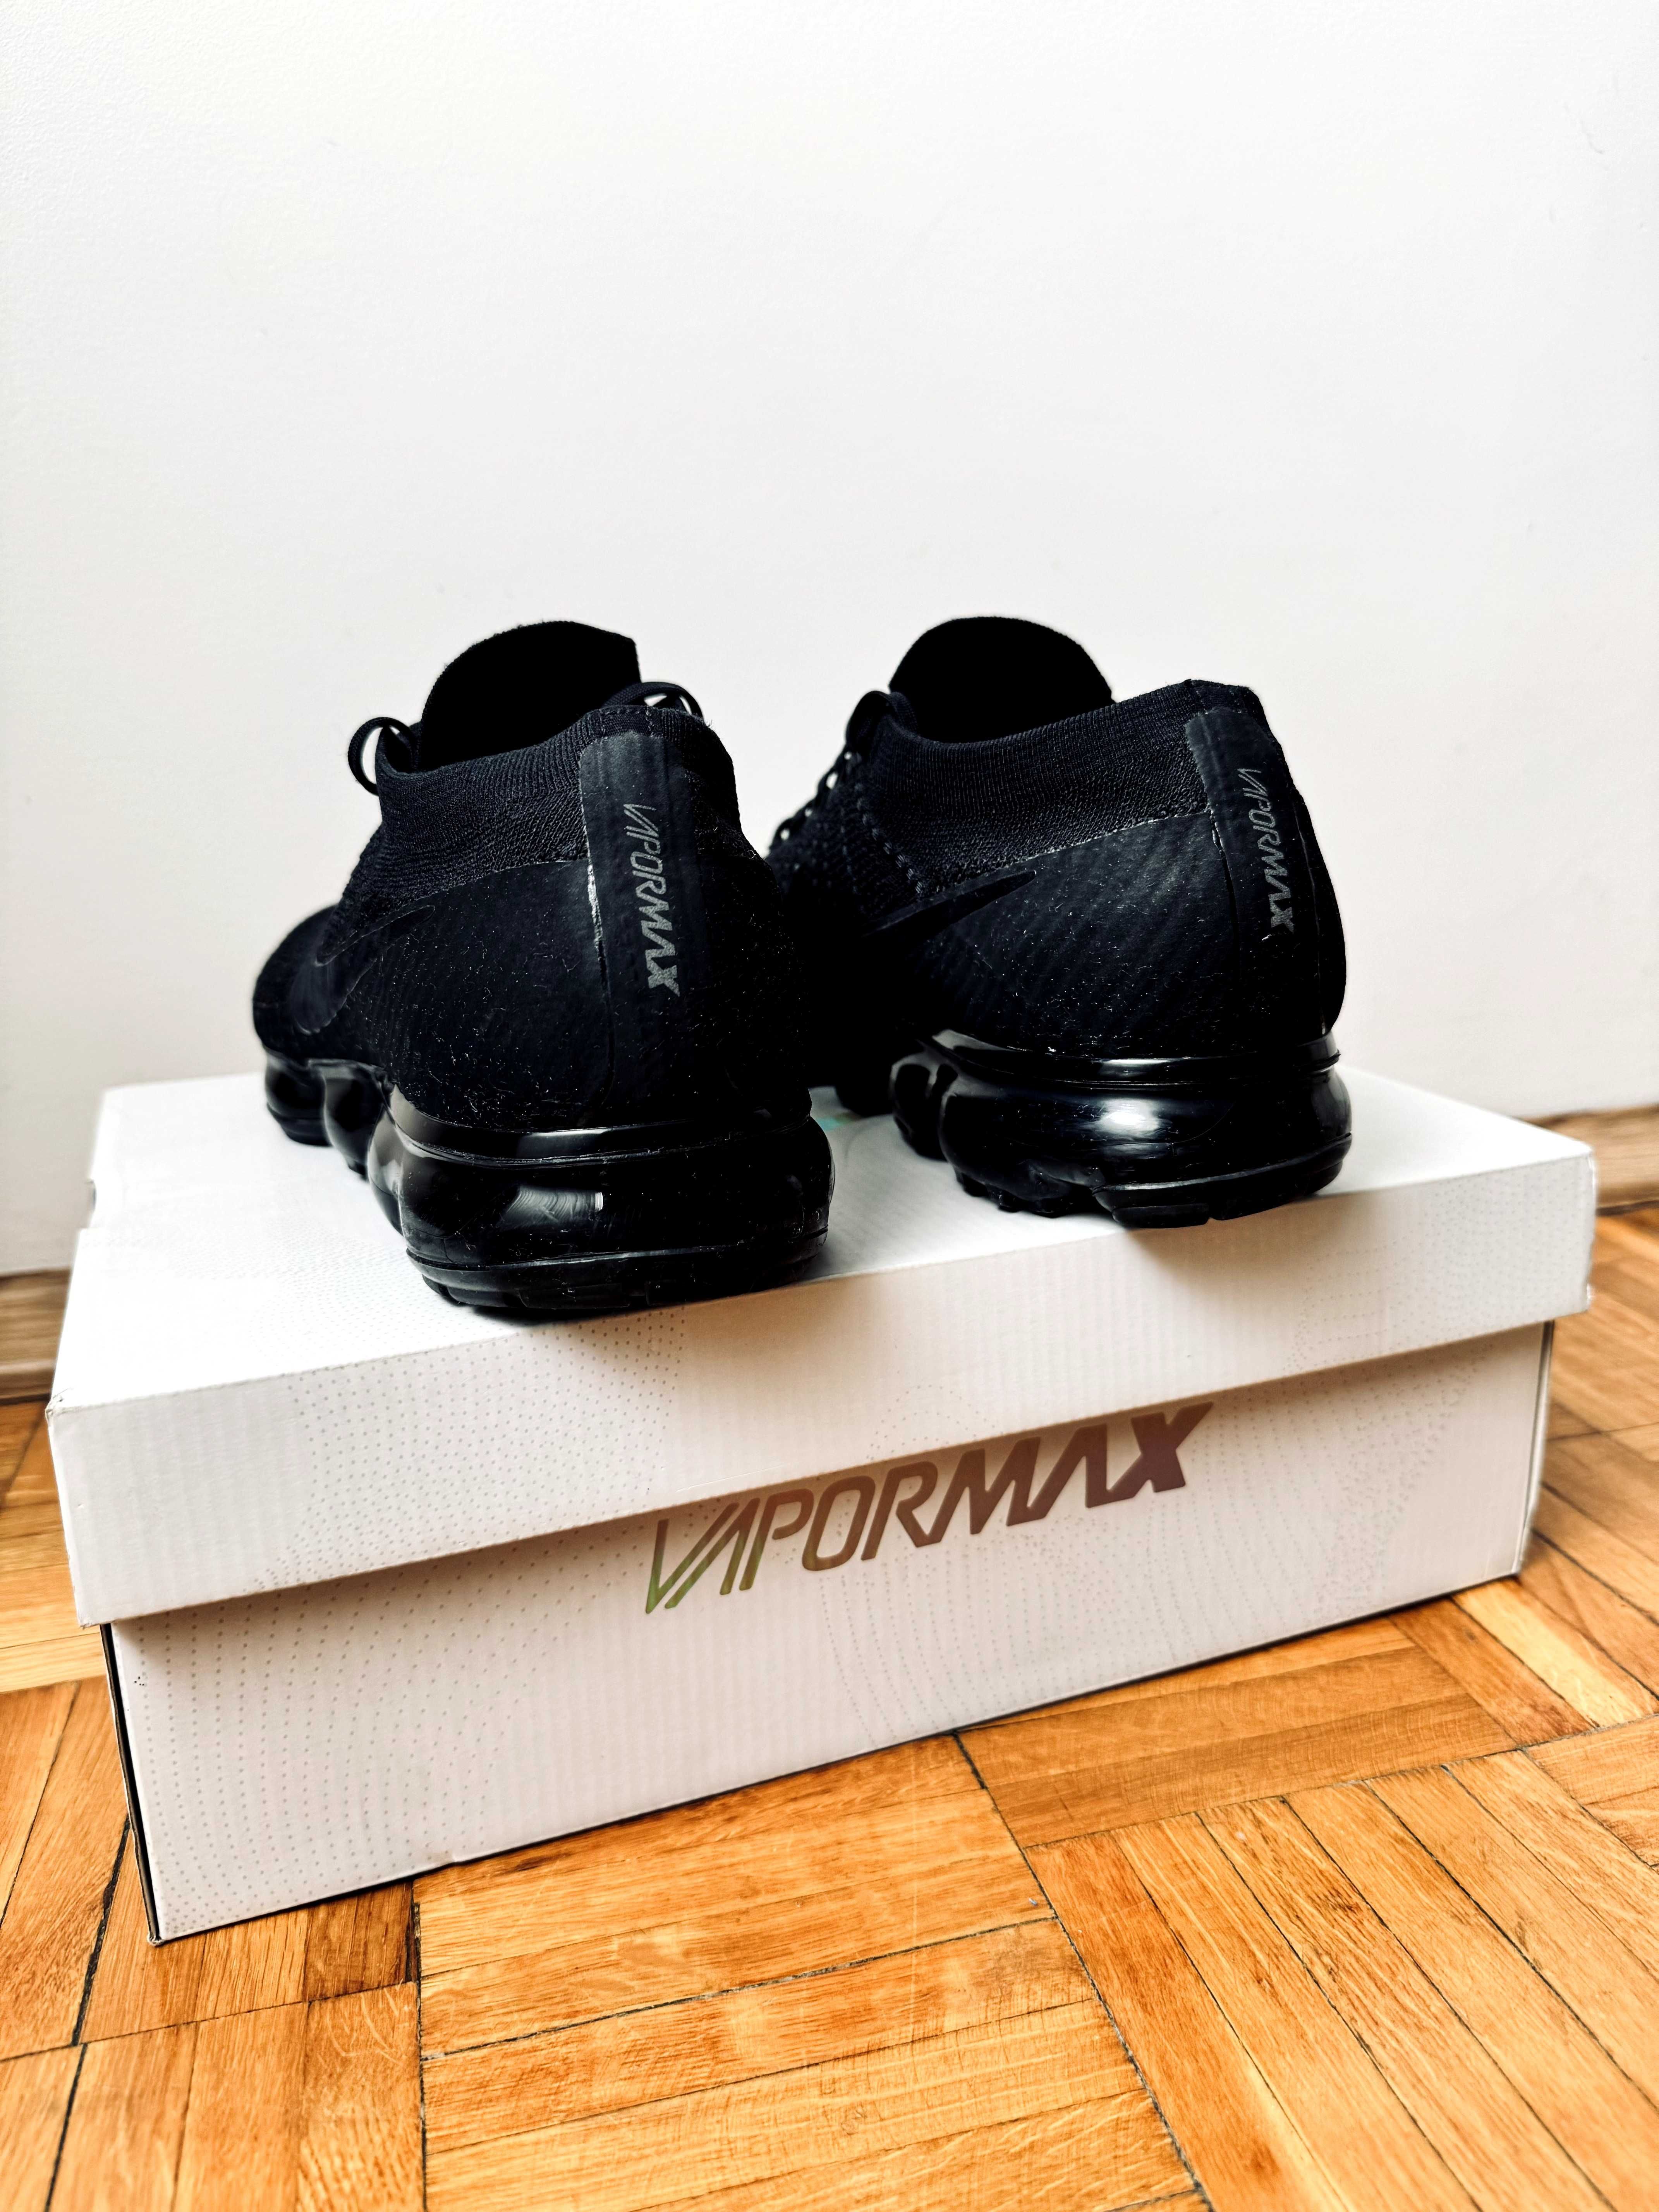 Nike Vapormax FlyKnit - Black